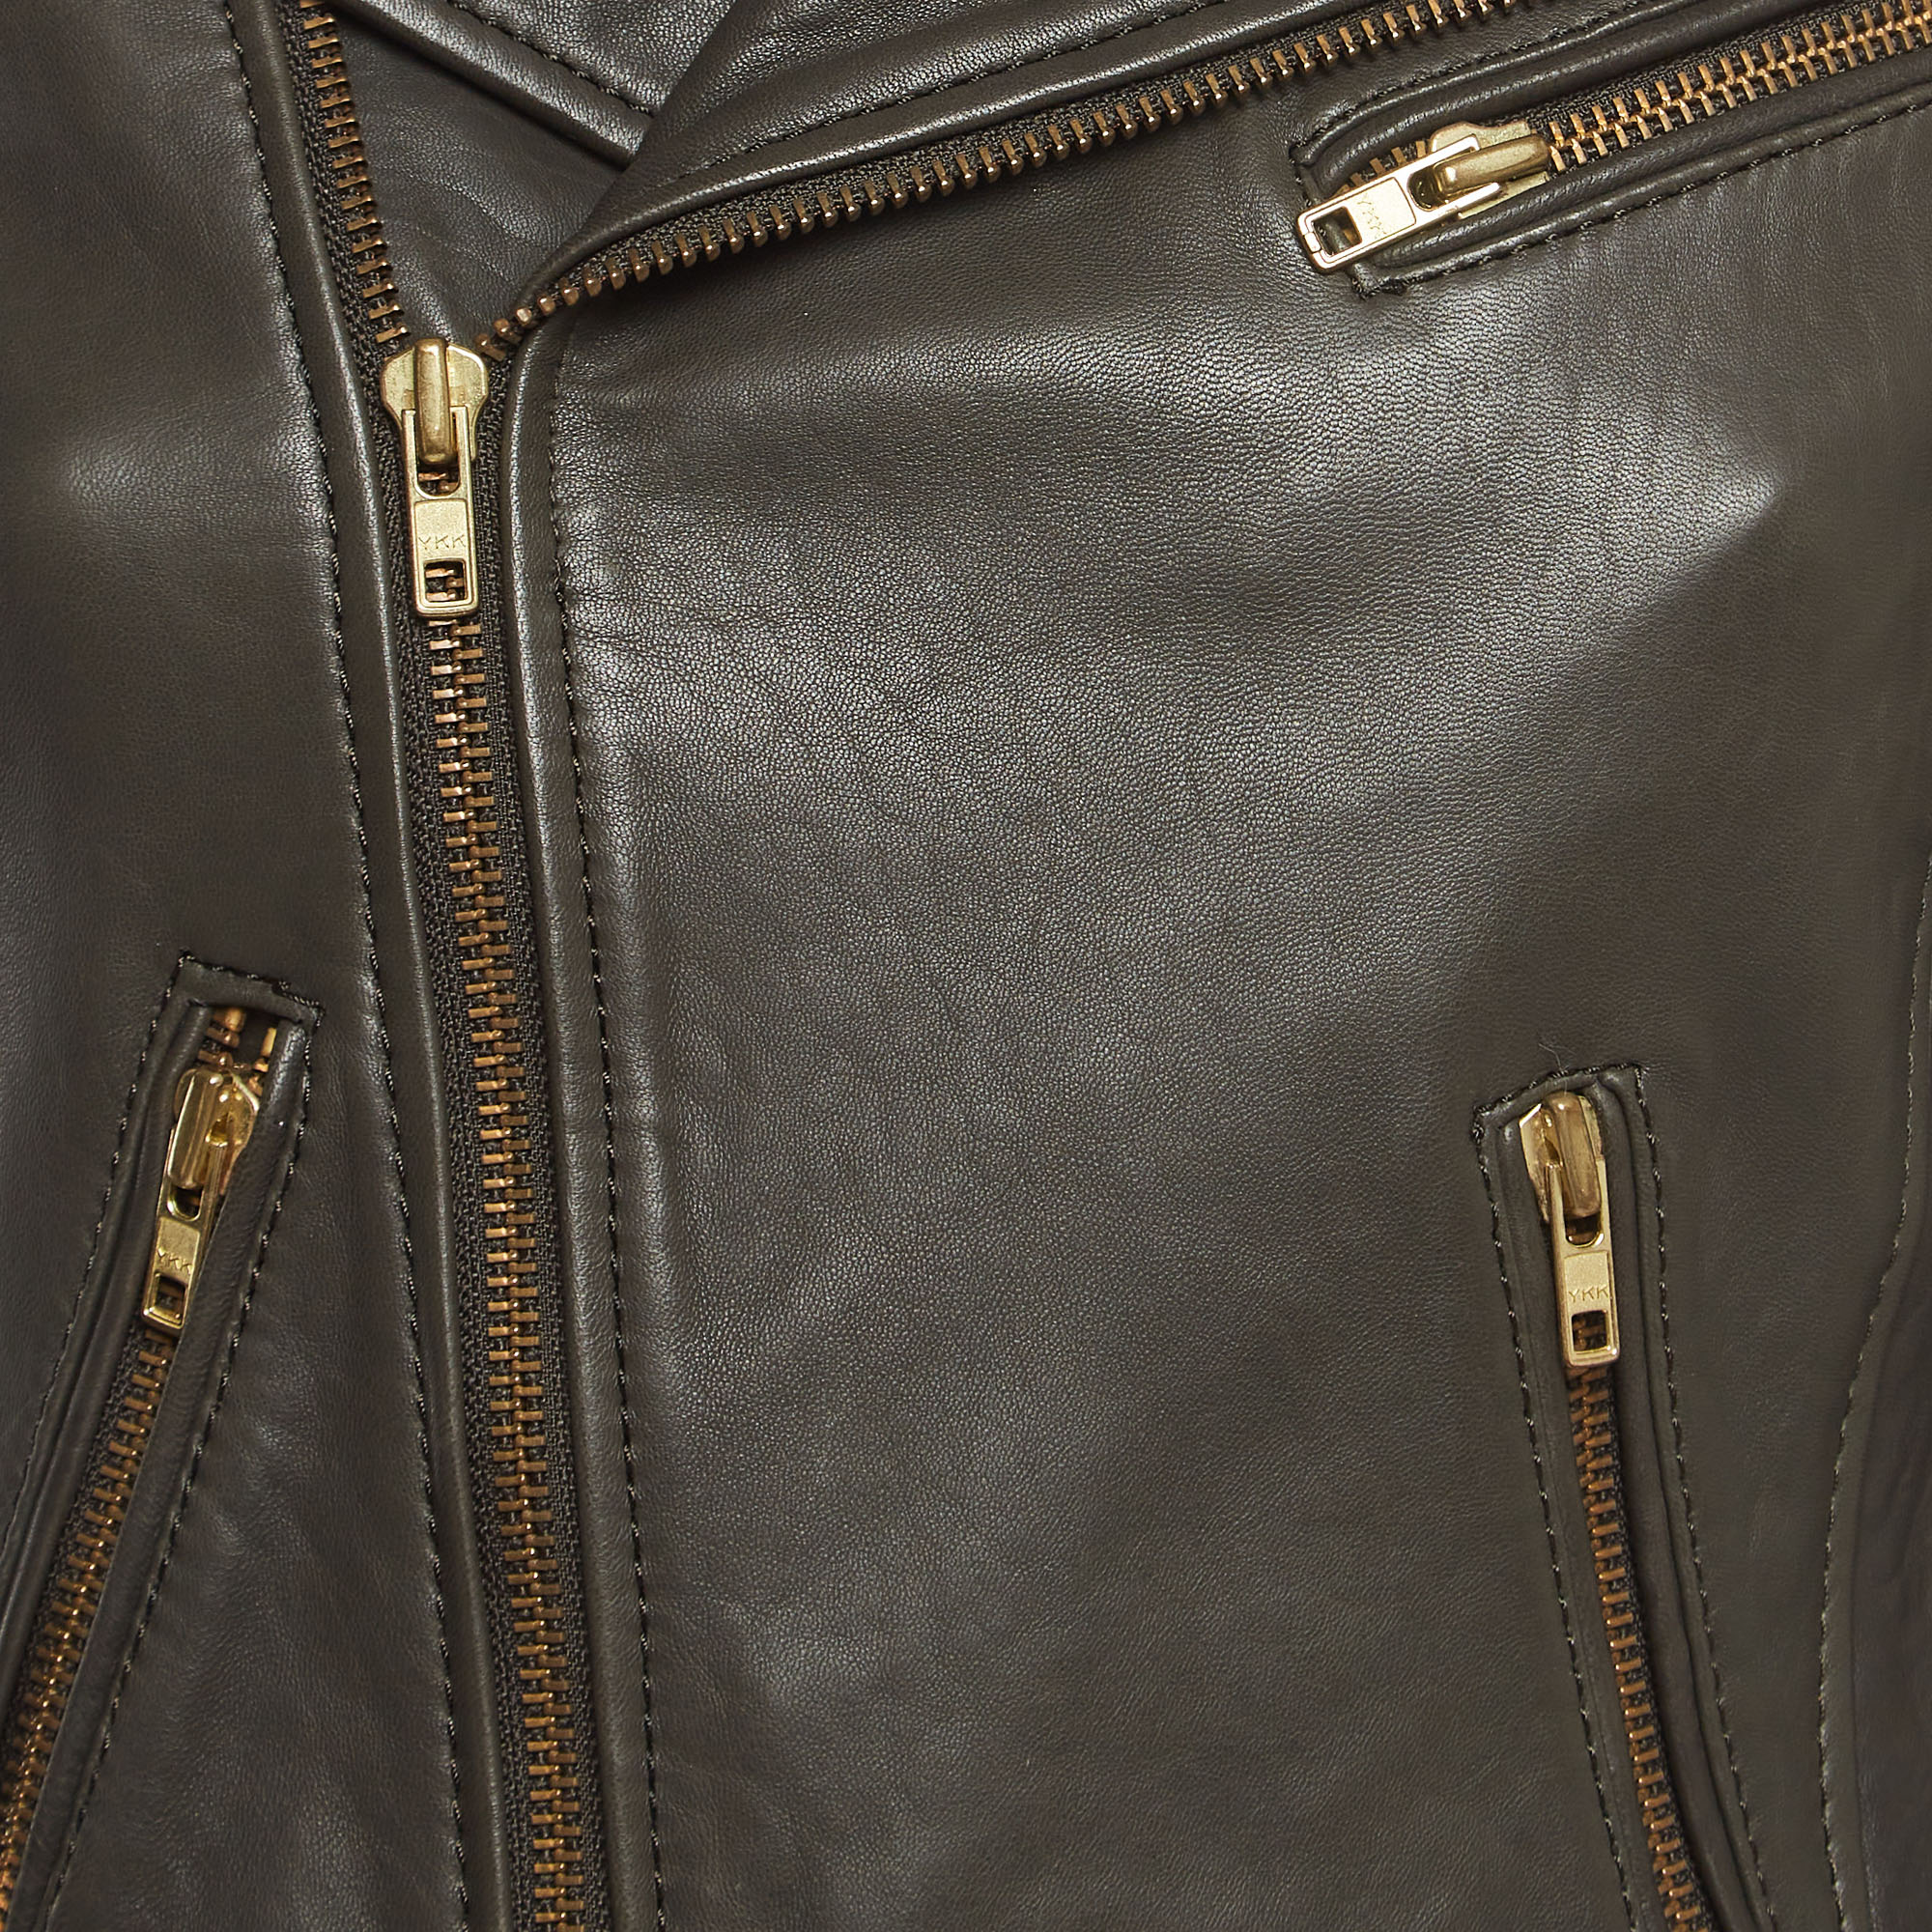 Maje Brown Leather Zipper Biker Jacket S